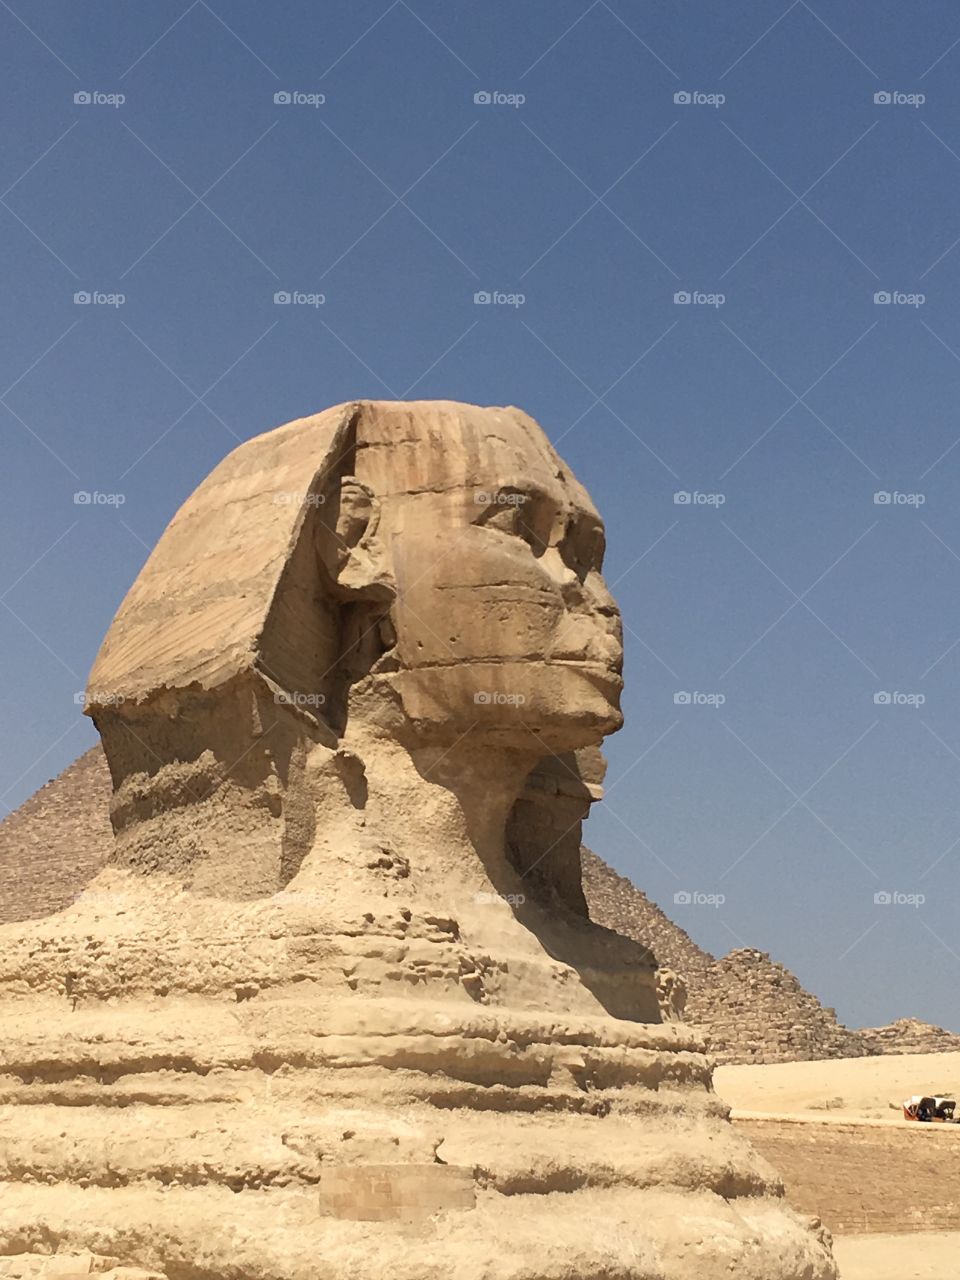 The Sphinx 